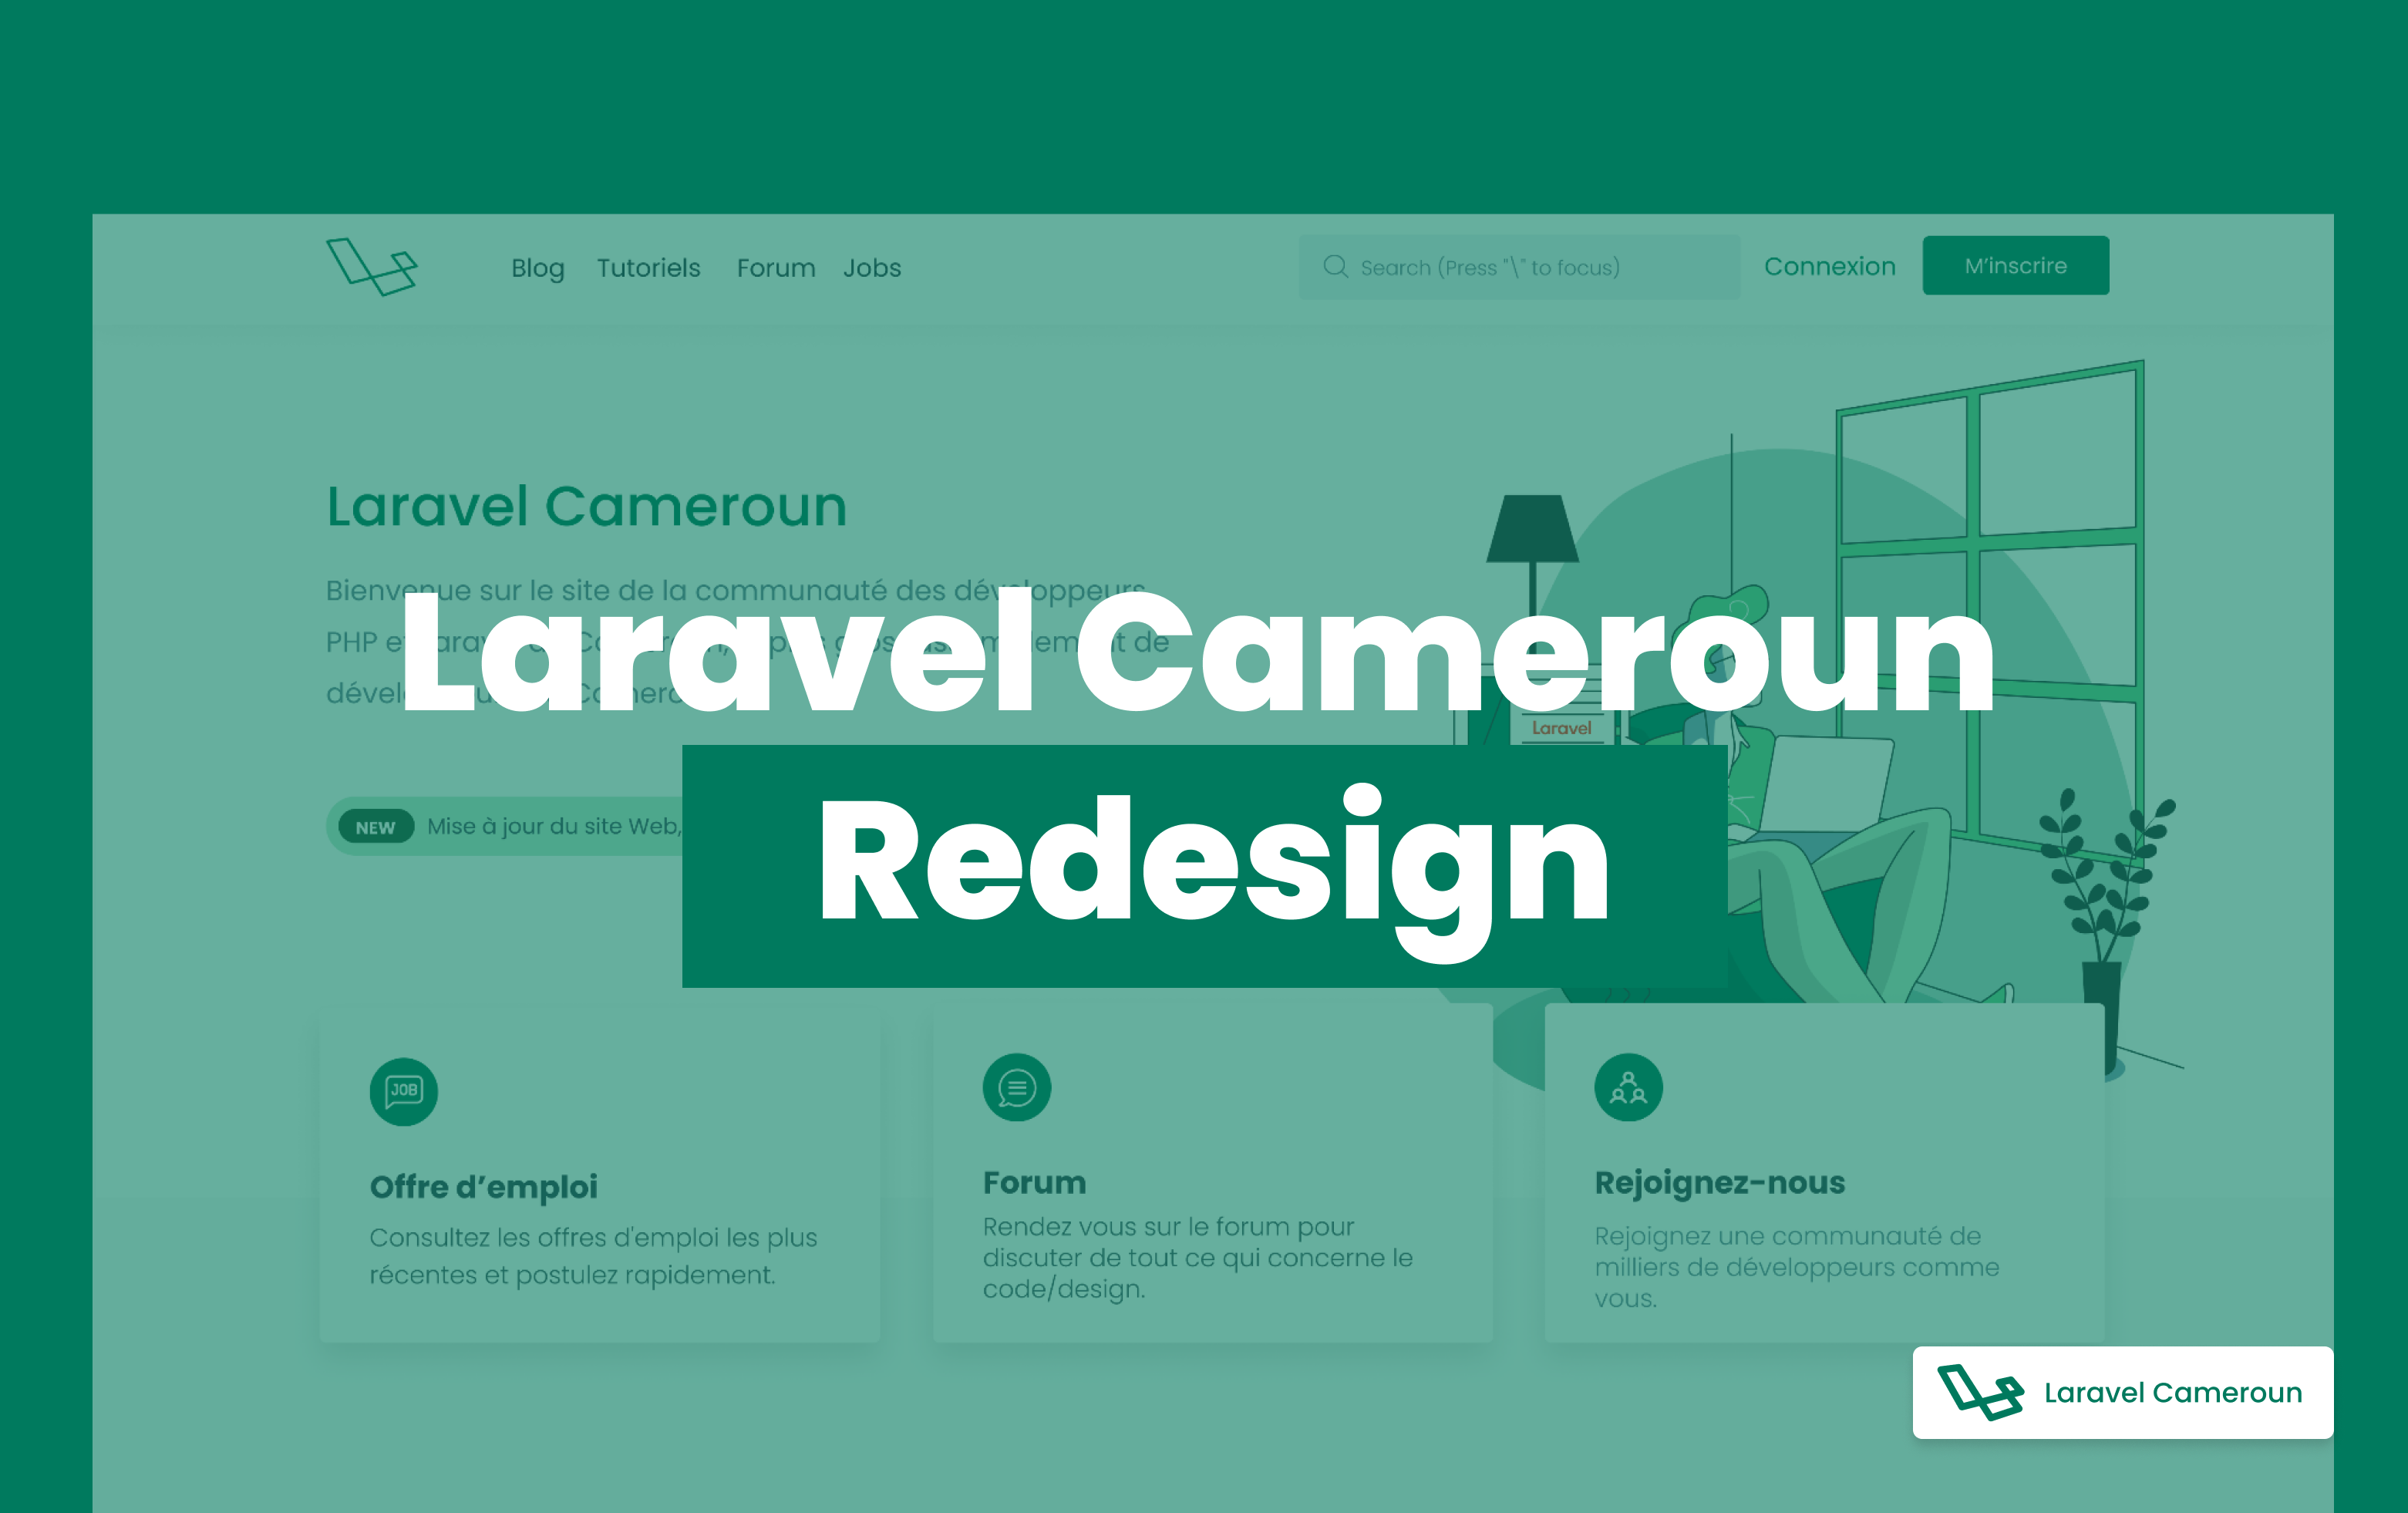 laravel-cameroun-redesign-uses